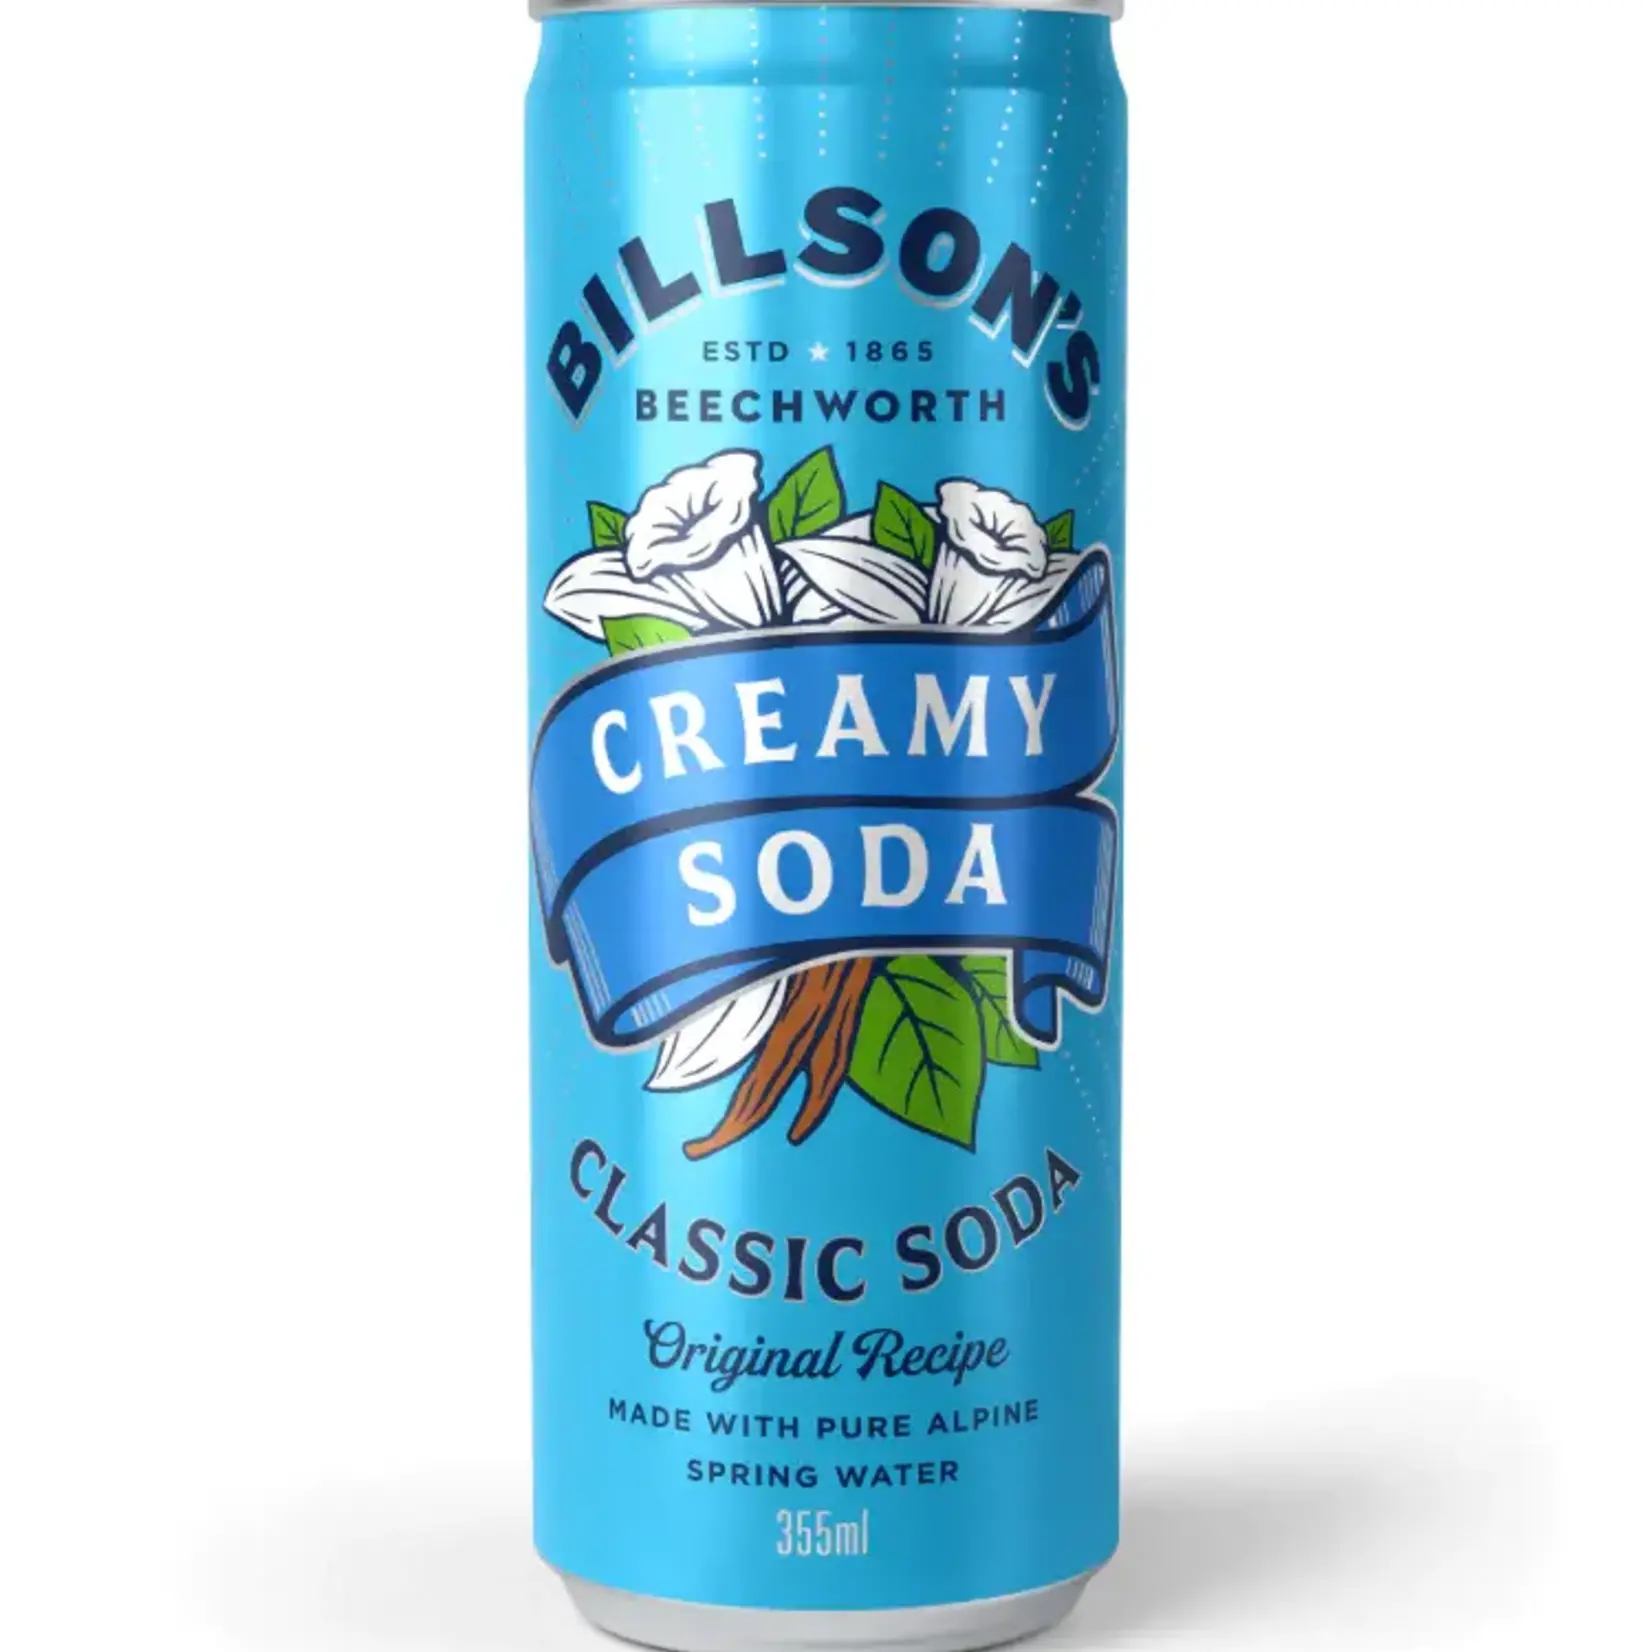 Classic Soda Creamy Soda 355ml Billson’s